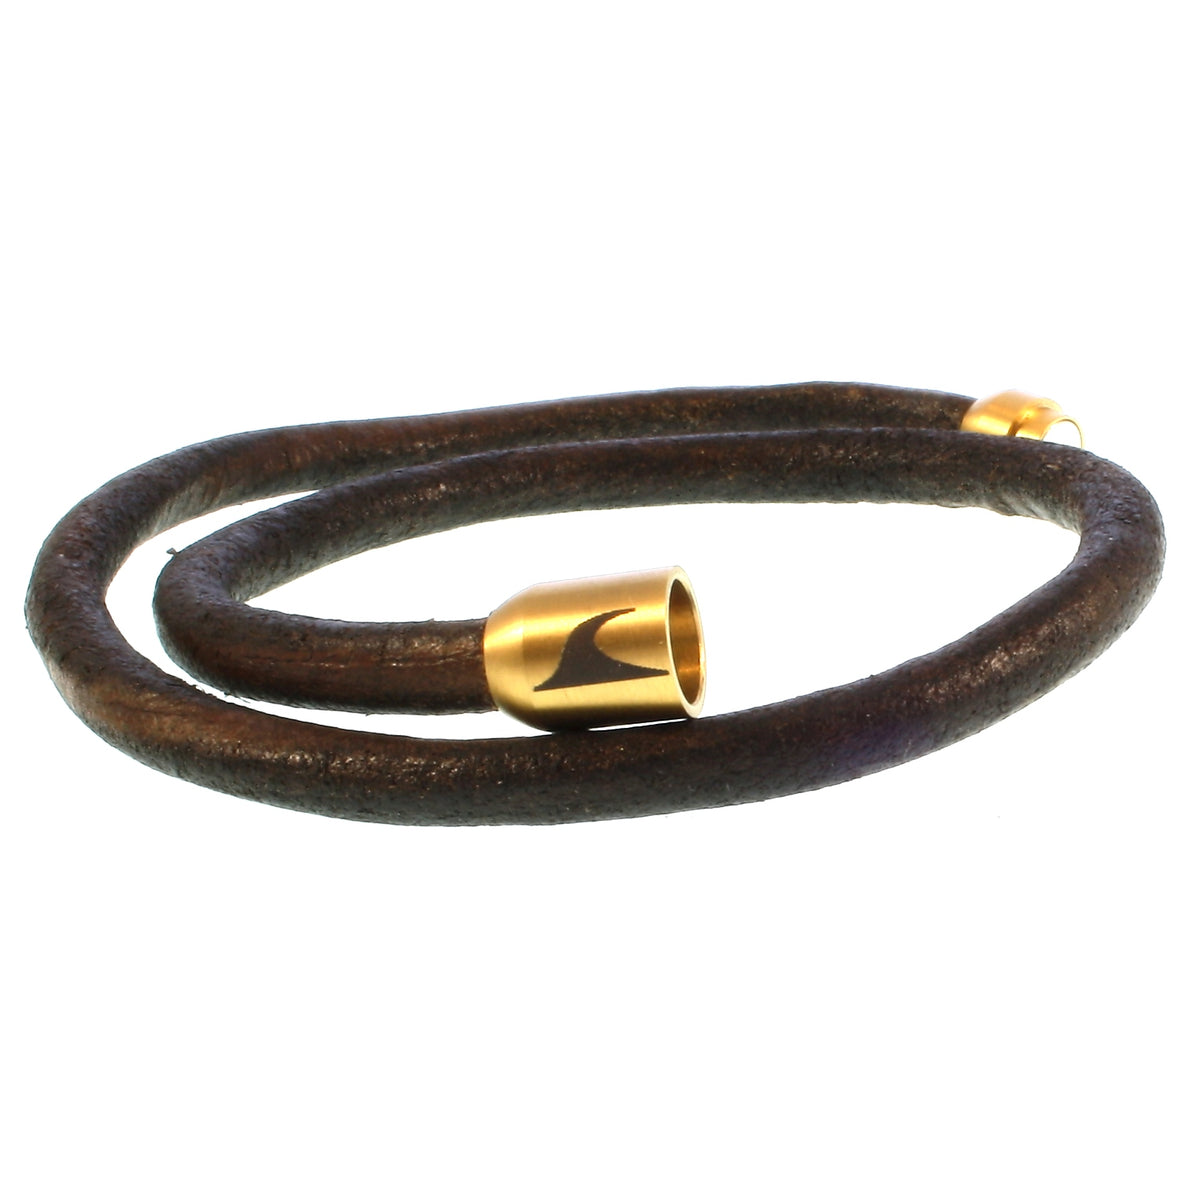 Herren-Leder-Armband-hawaii-braun-gold-massiv-Edelstahlverschluss-offen-wavepirate-shop-r